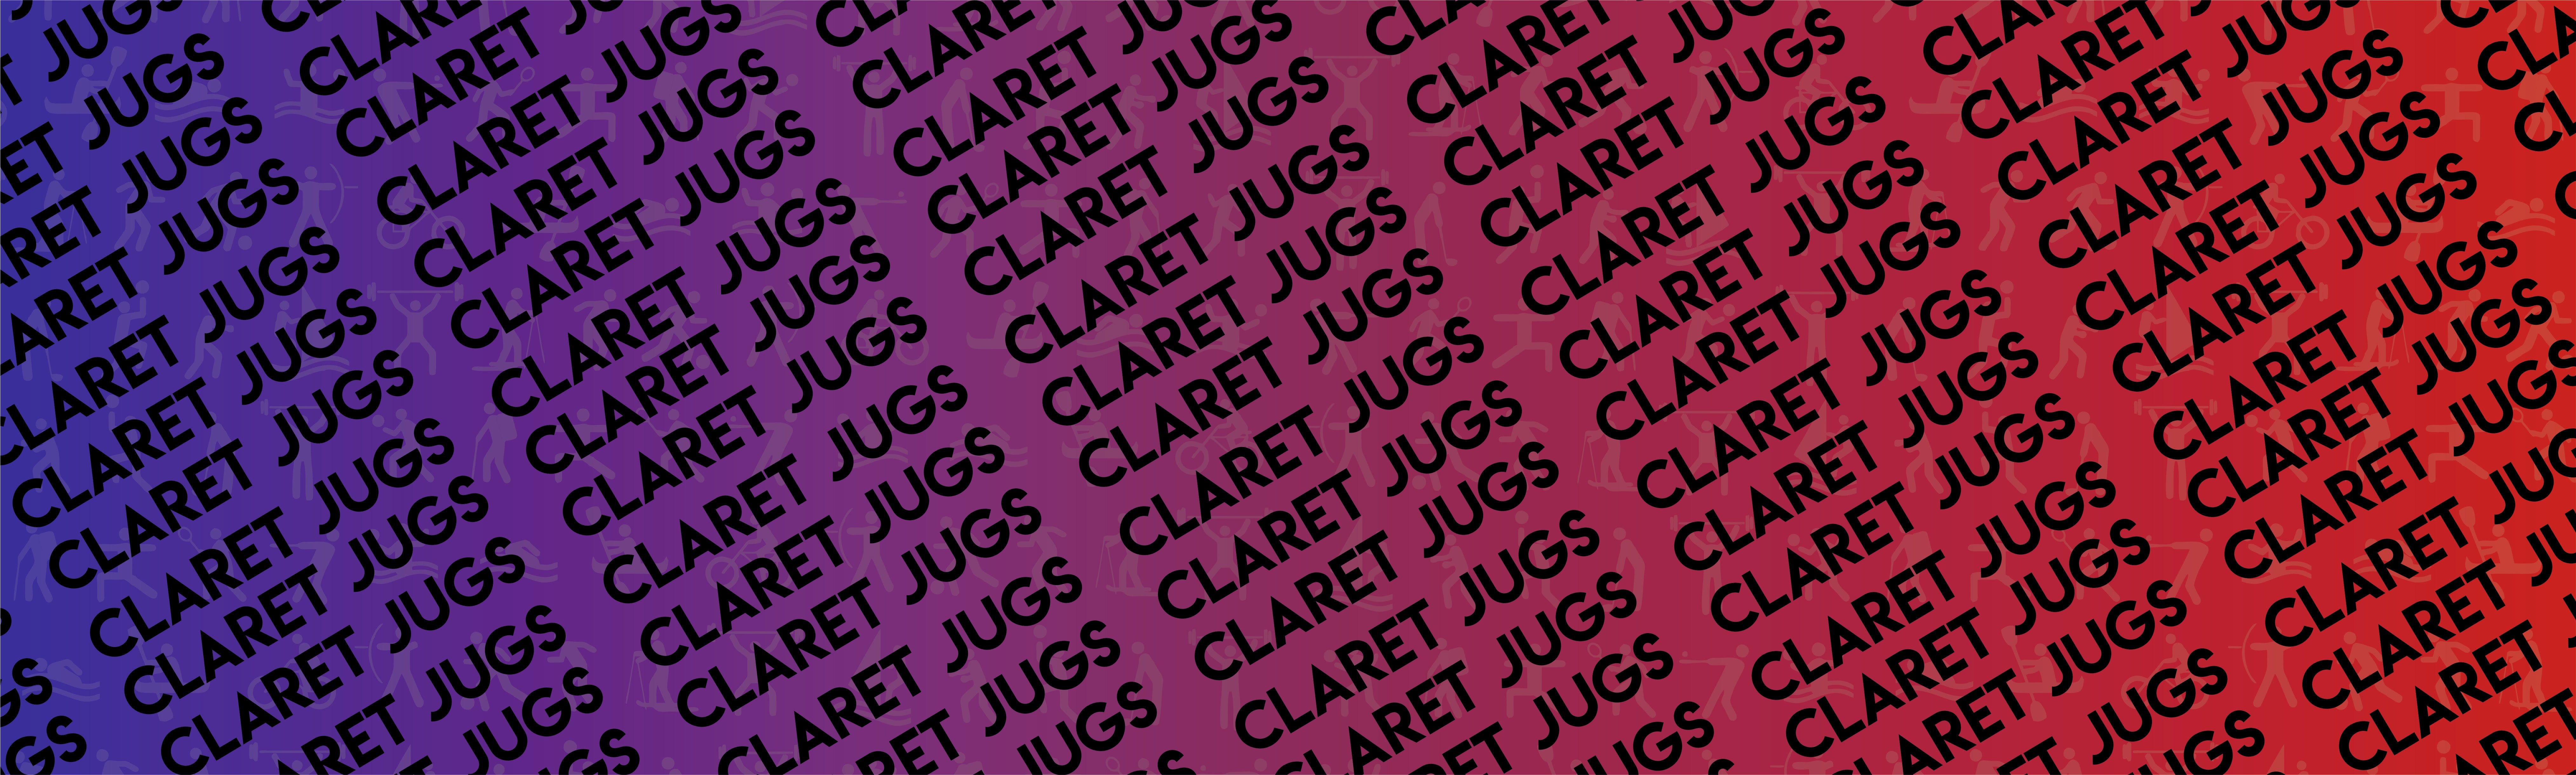 Claret Jugs